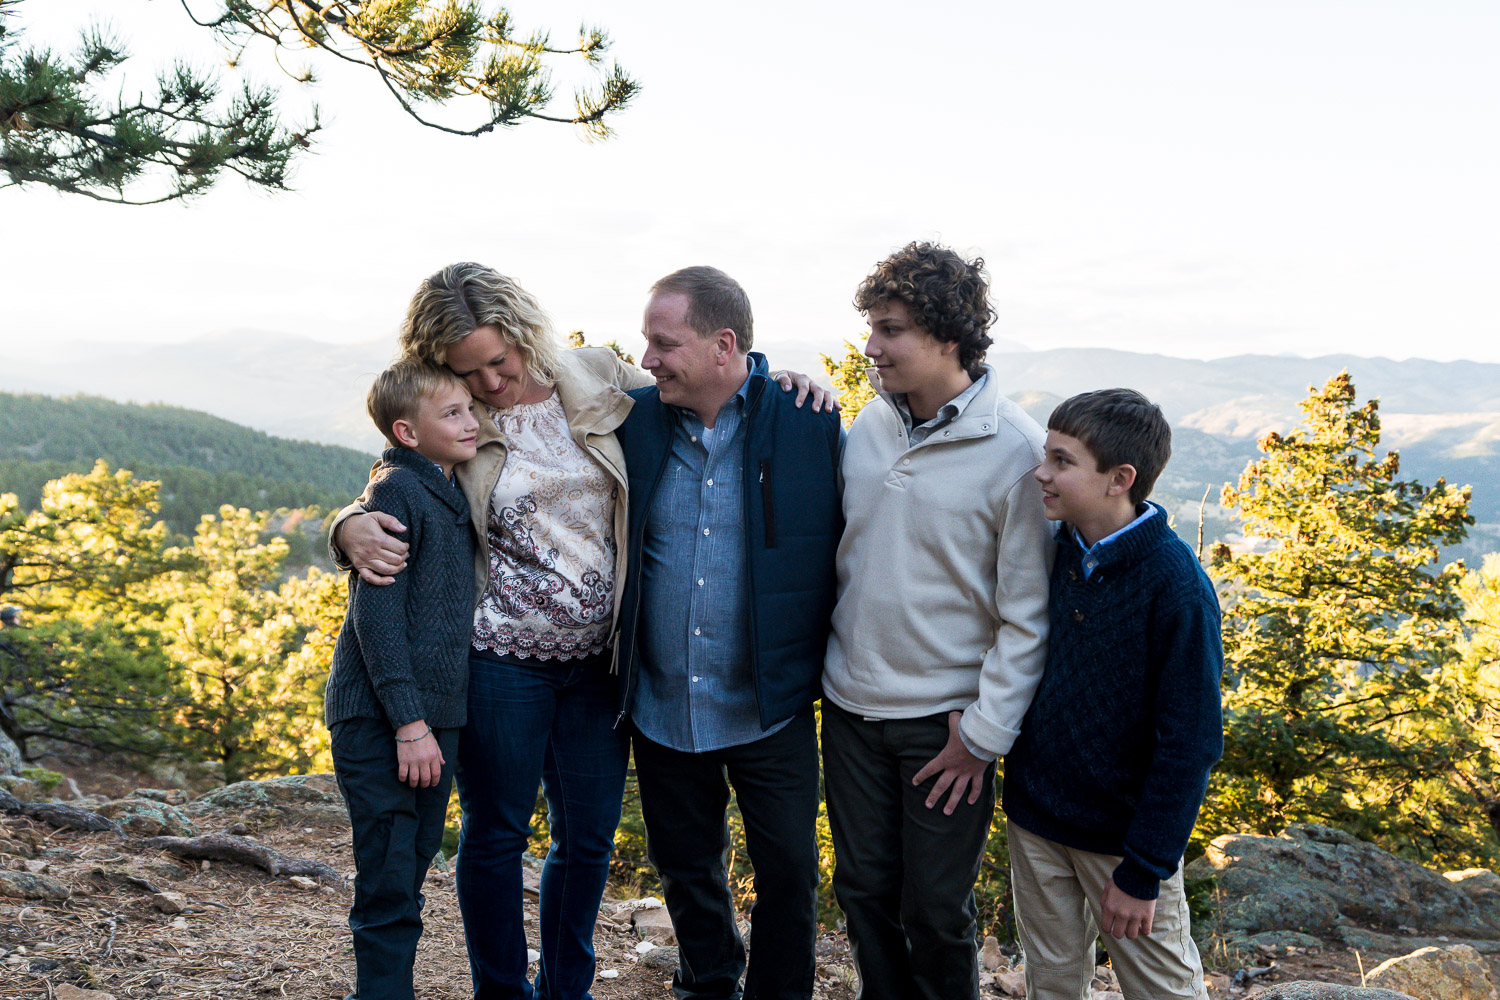 Boulder Family Photo